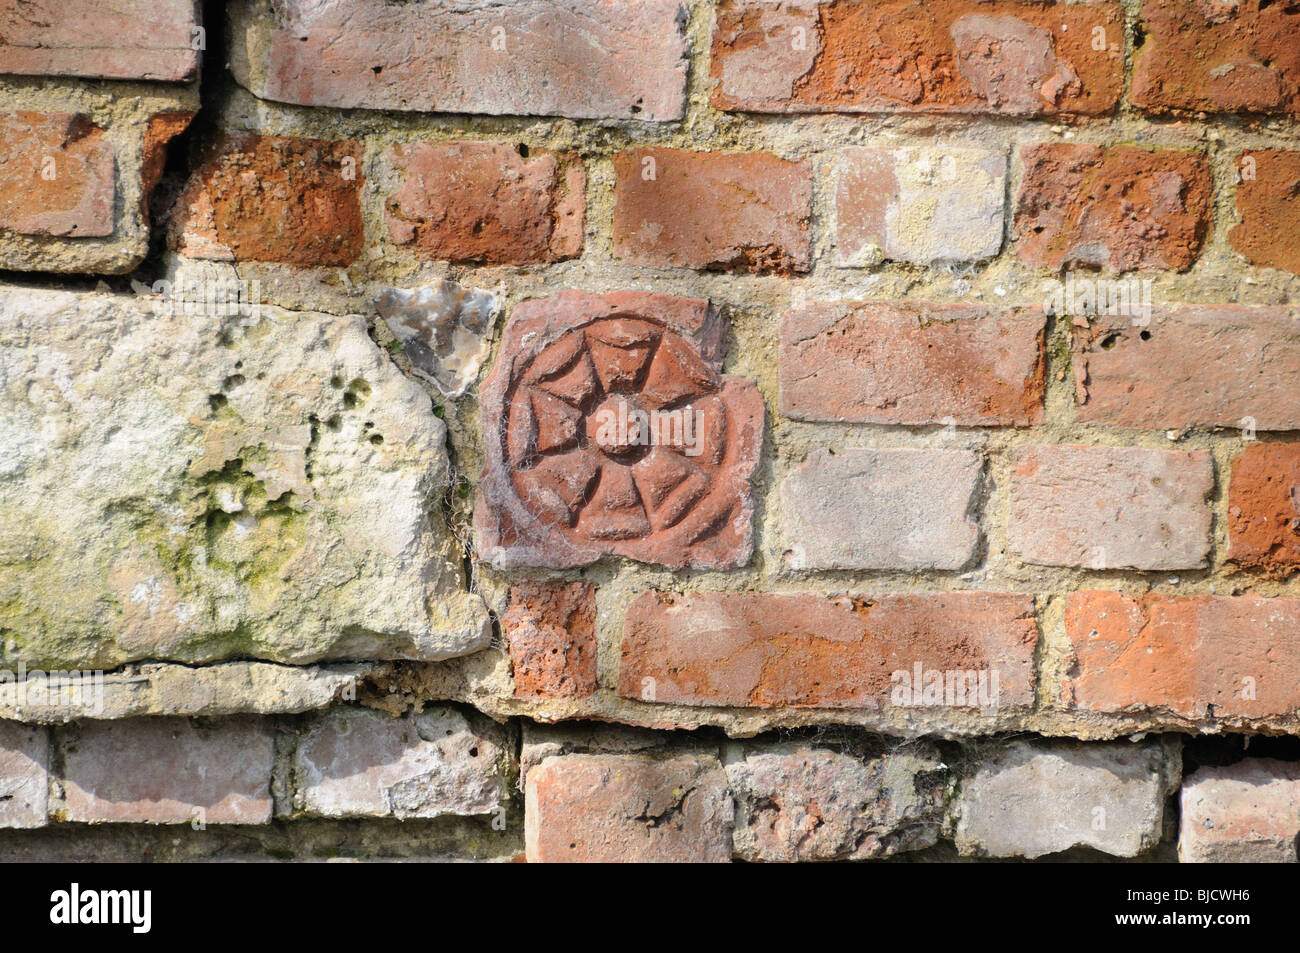 Tudor Rose imprint Stock Photo - Alamy